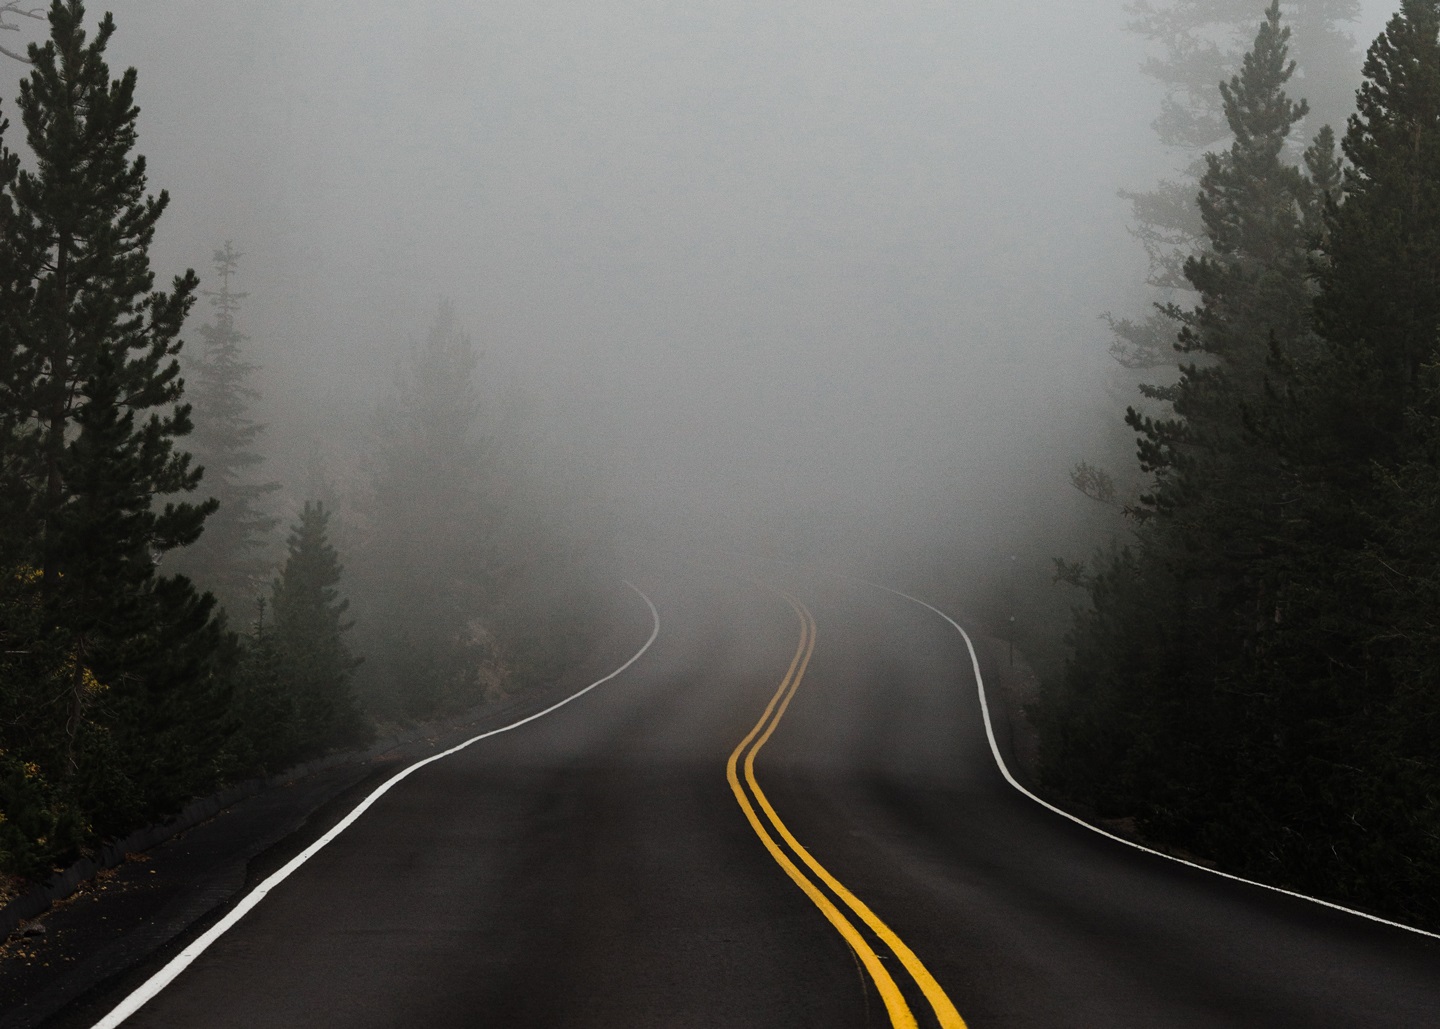 uncertain road ahead